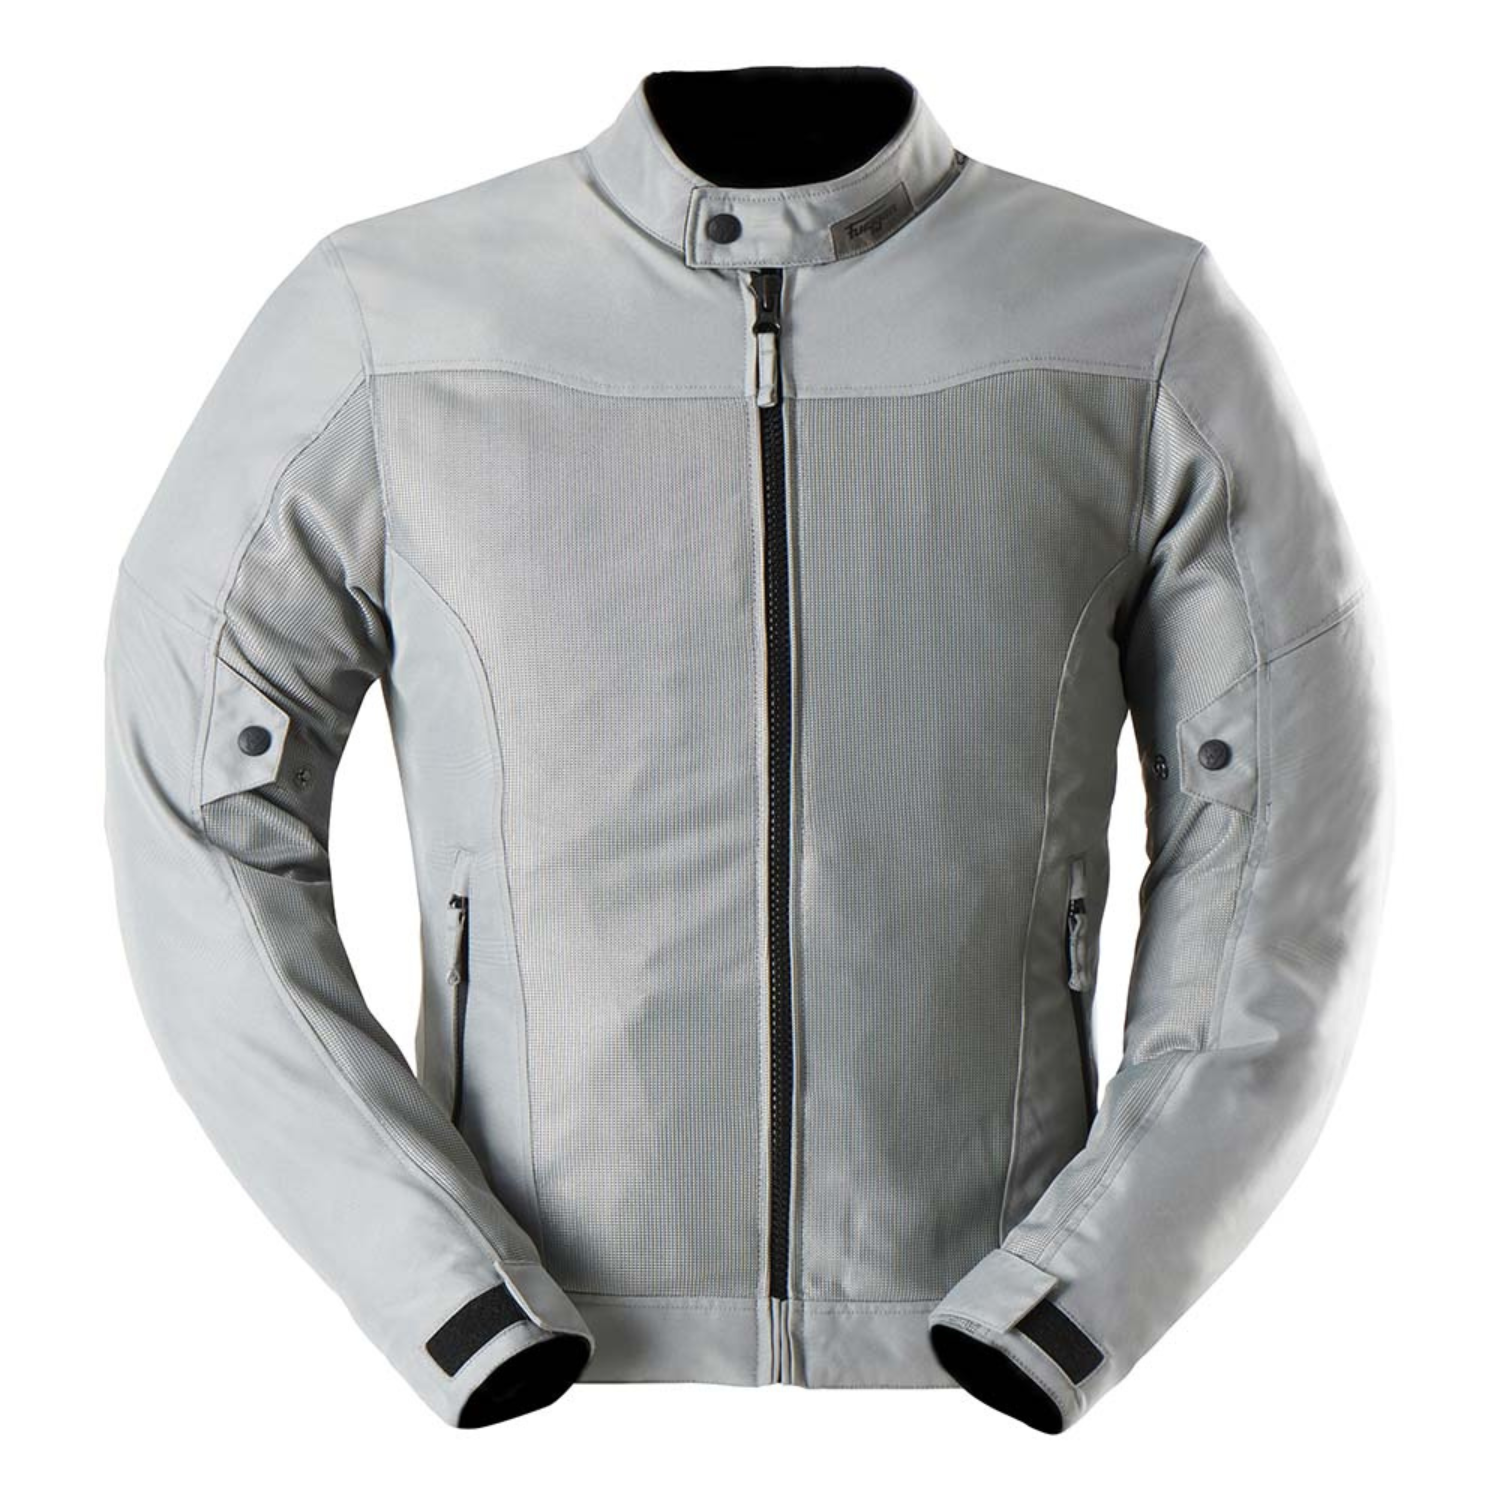 Image of Furygan Mistral Evo 3 Jacket Grey Taille 2XL